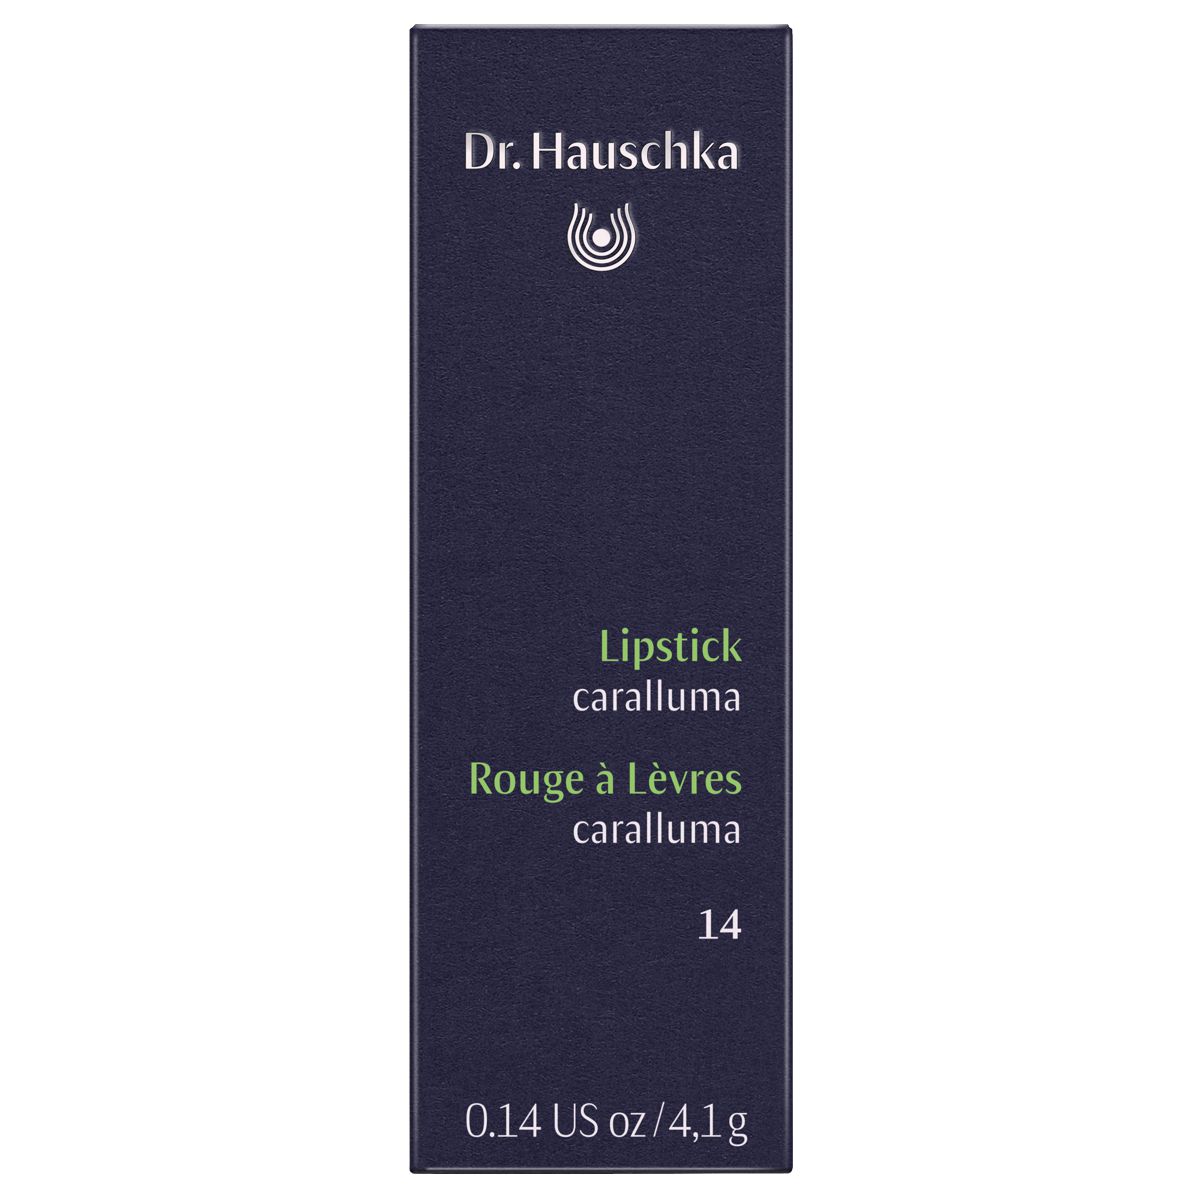 Dr_Hauschka_Lipstick_14_caralluma_online_kaufen